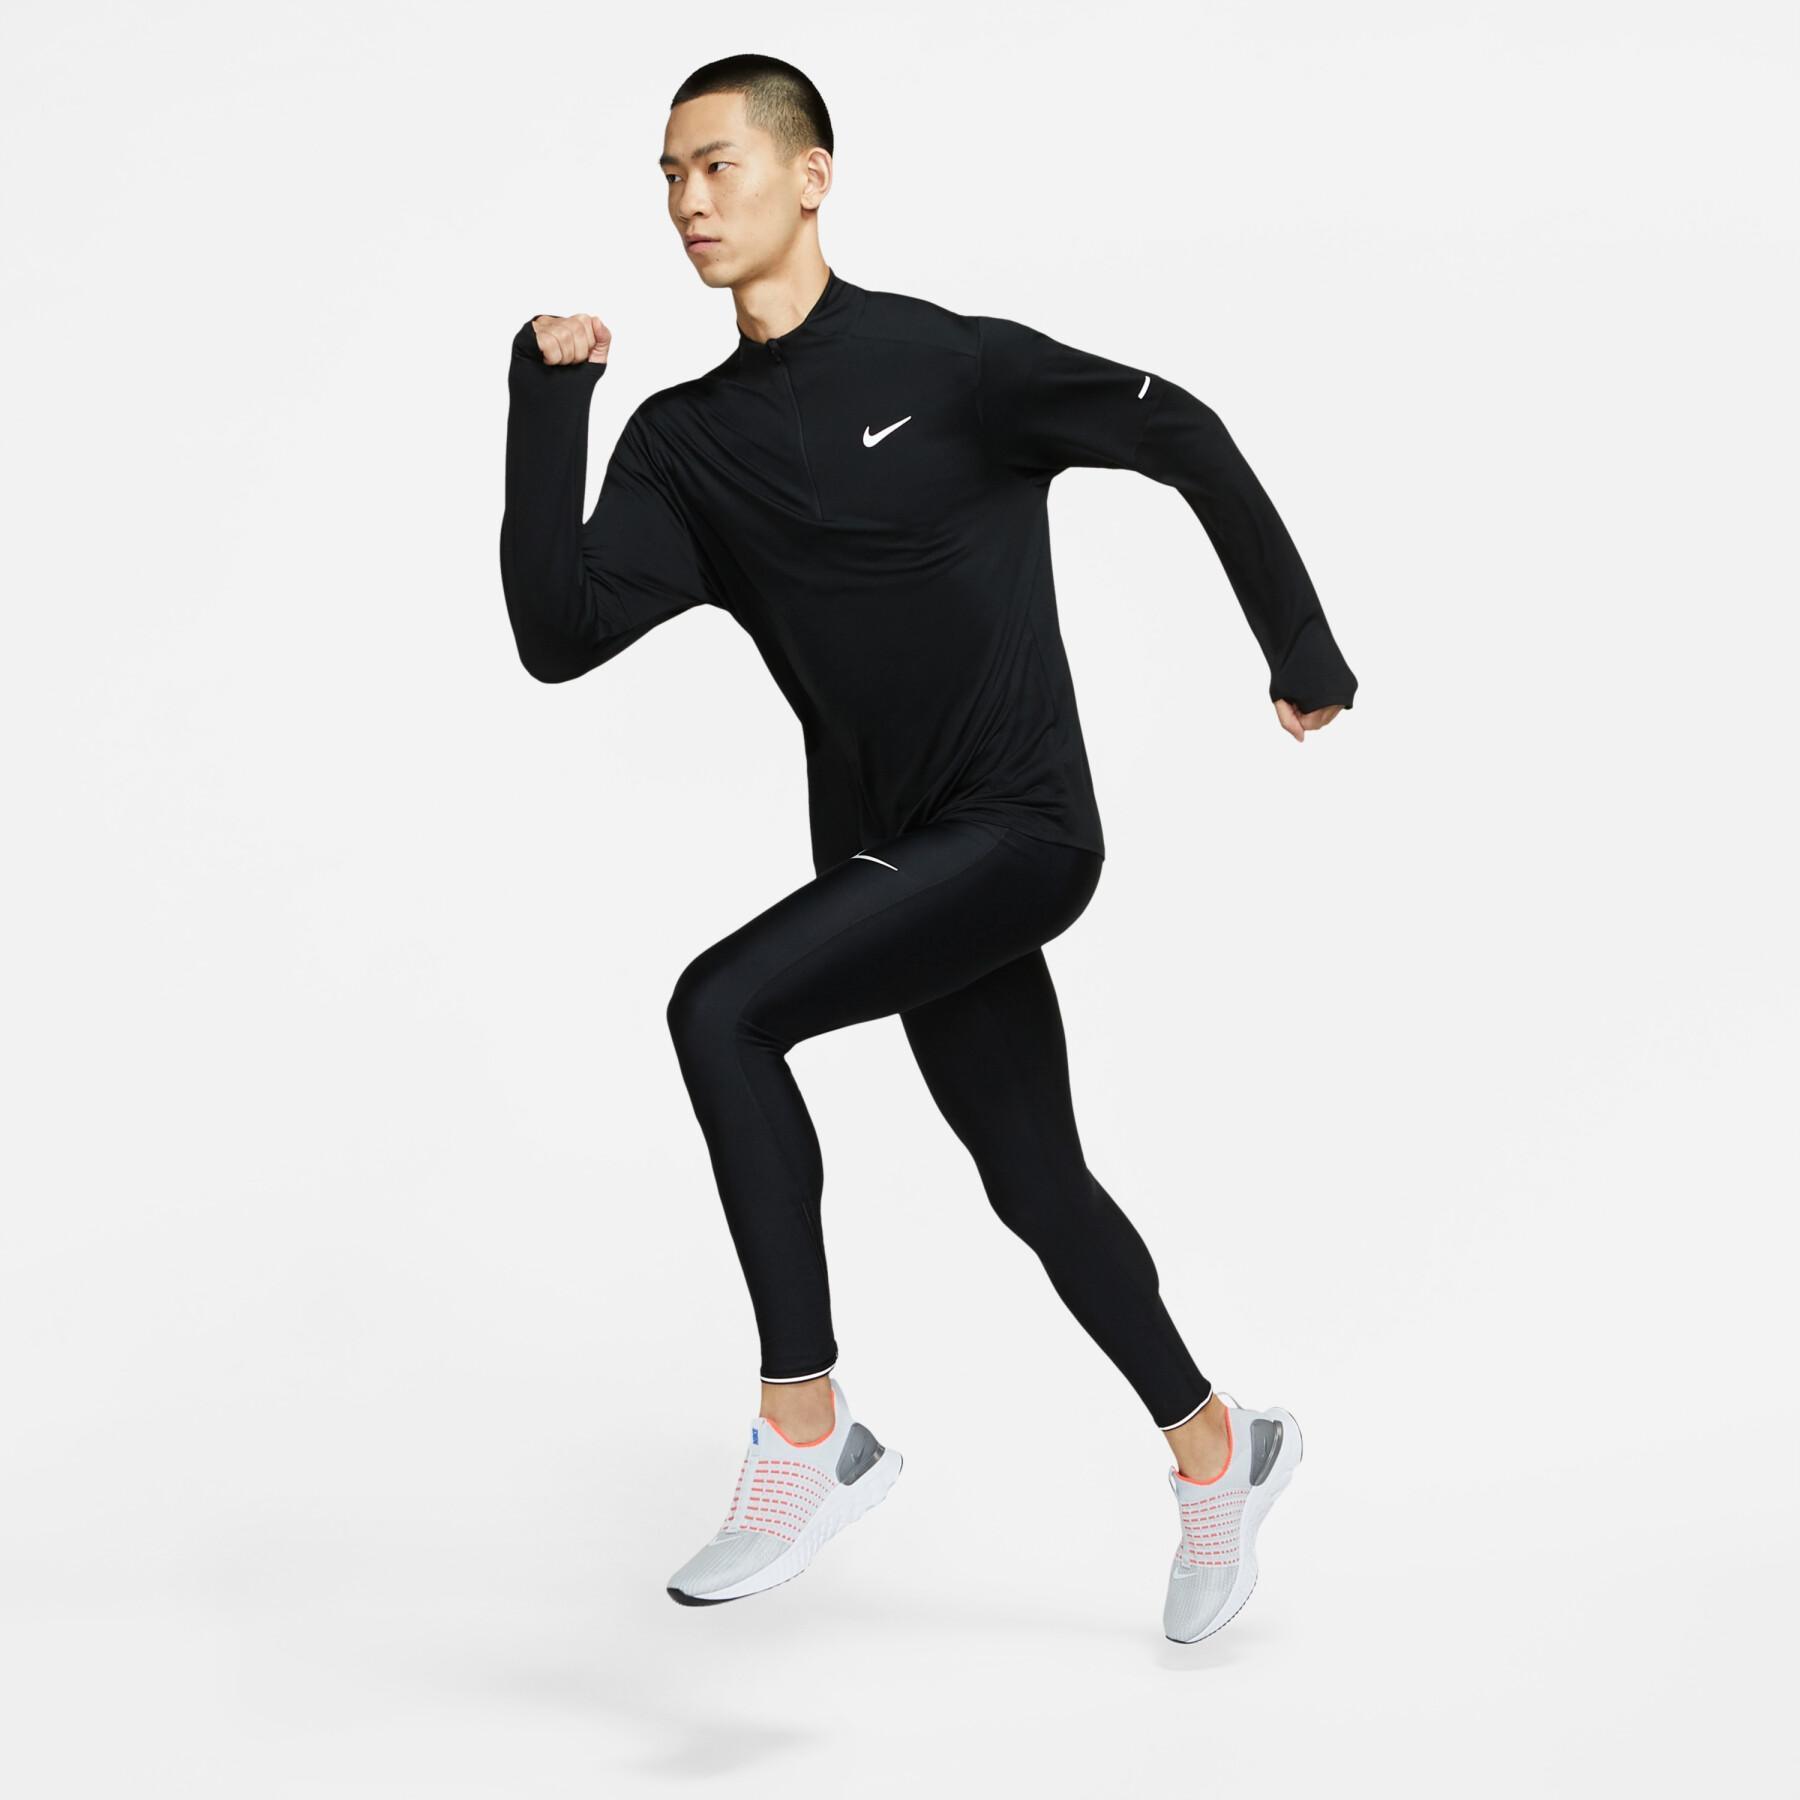 Giacca Nike dynamic fit elmnt top hz